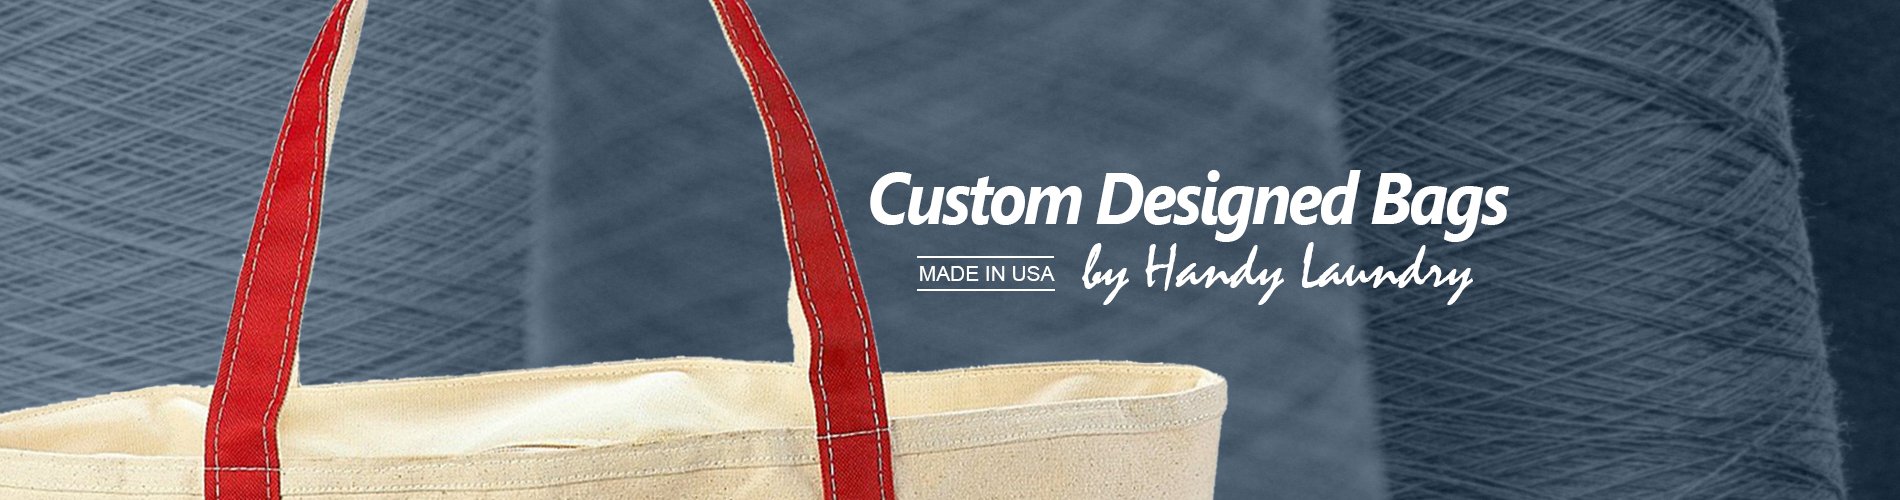 Custom Designed Bags